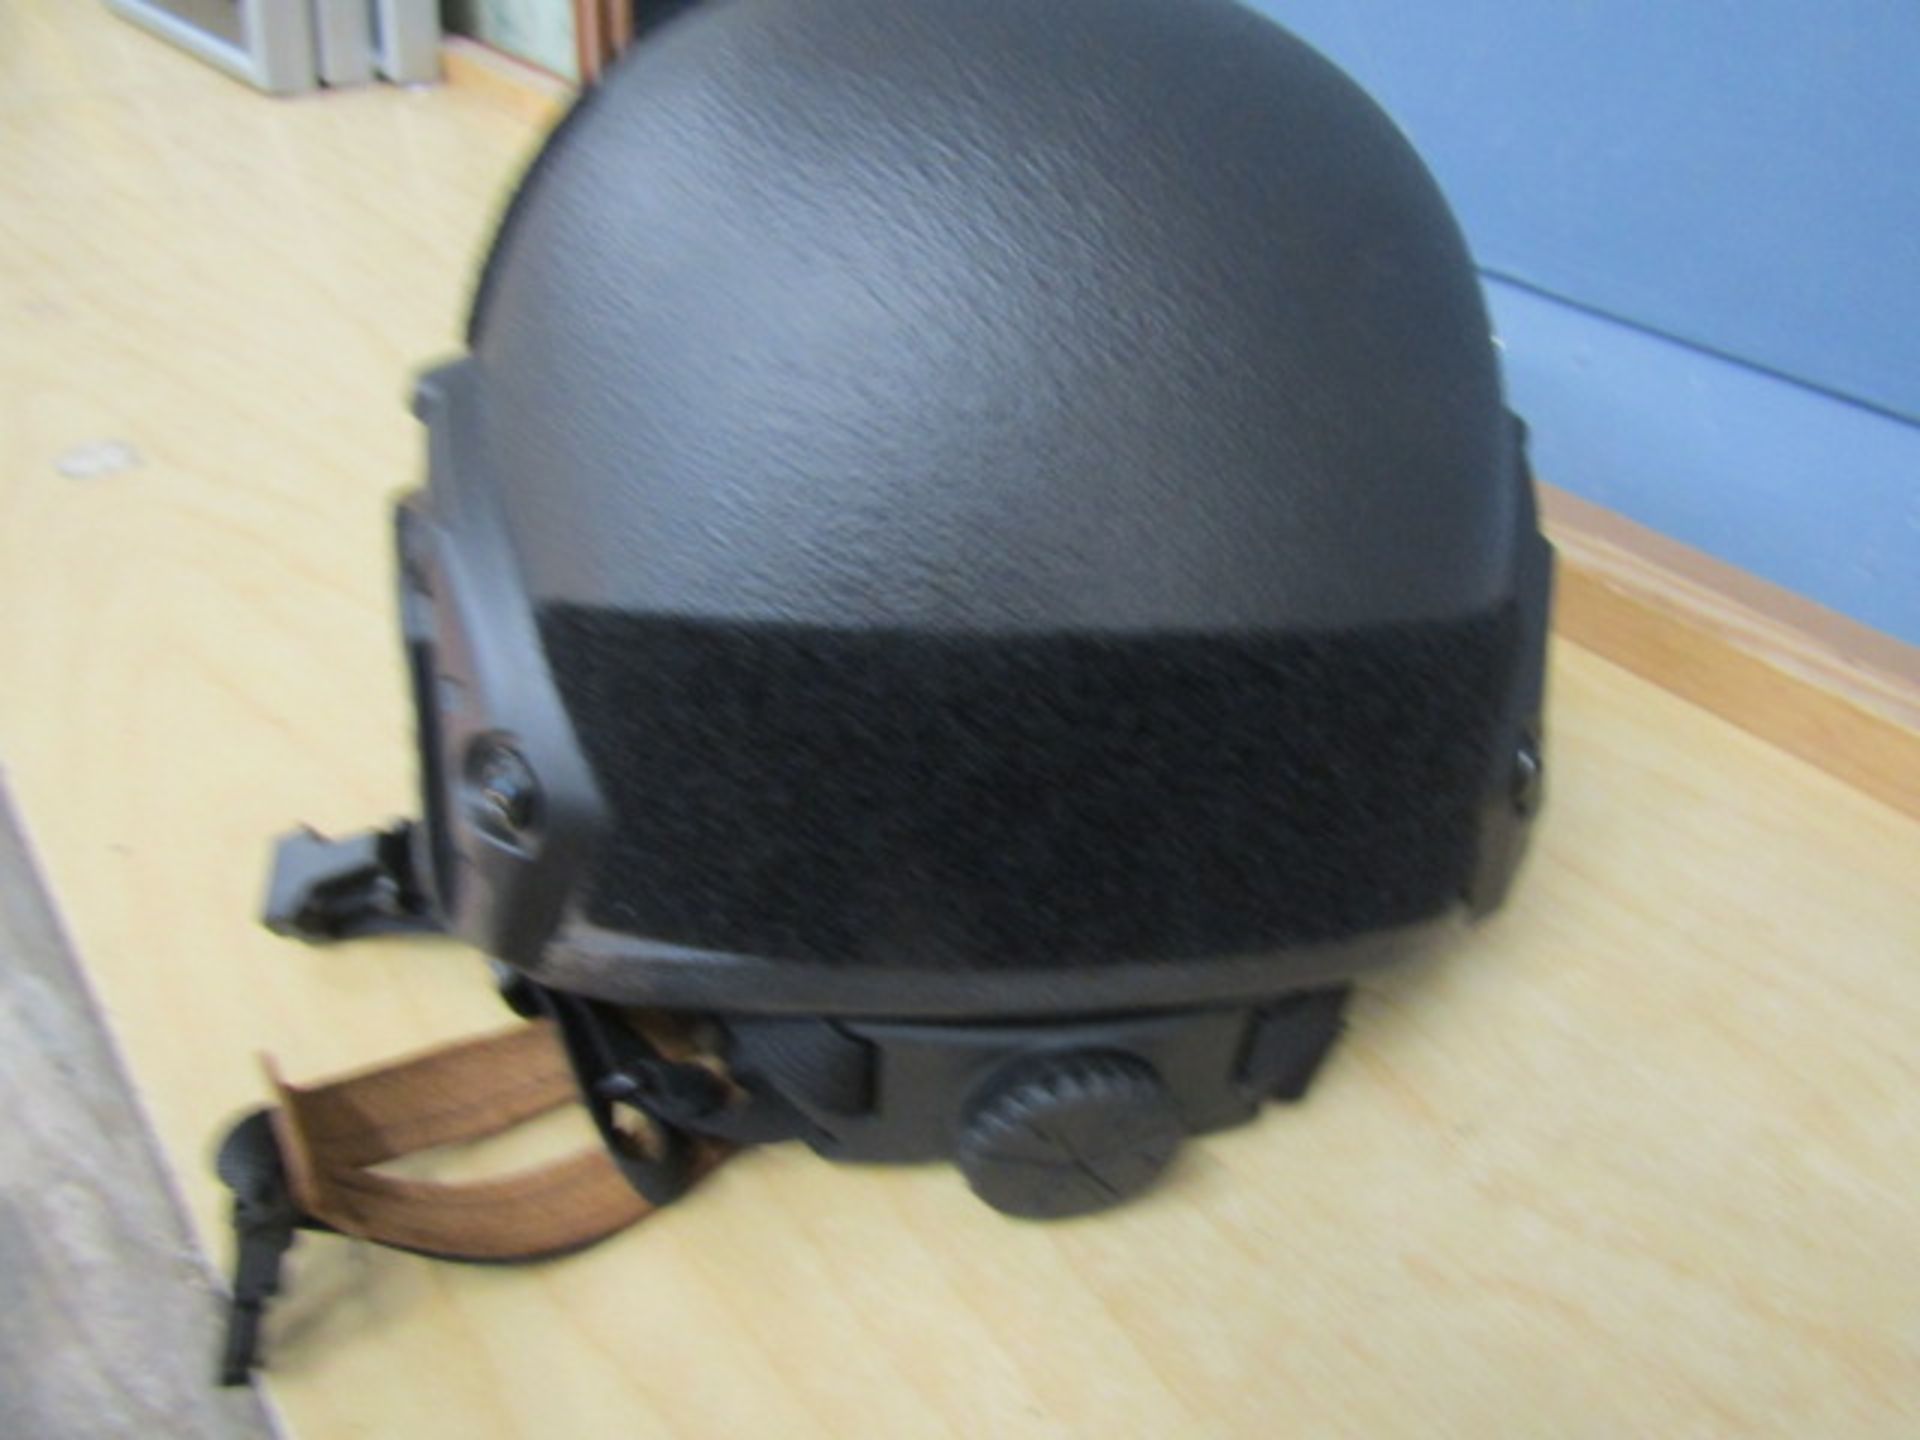 Kevlar (Aramid) ballistic FAST helmet with copy of test report- large size, unused - Image 2 of 5